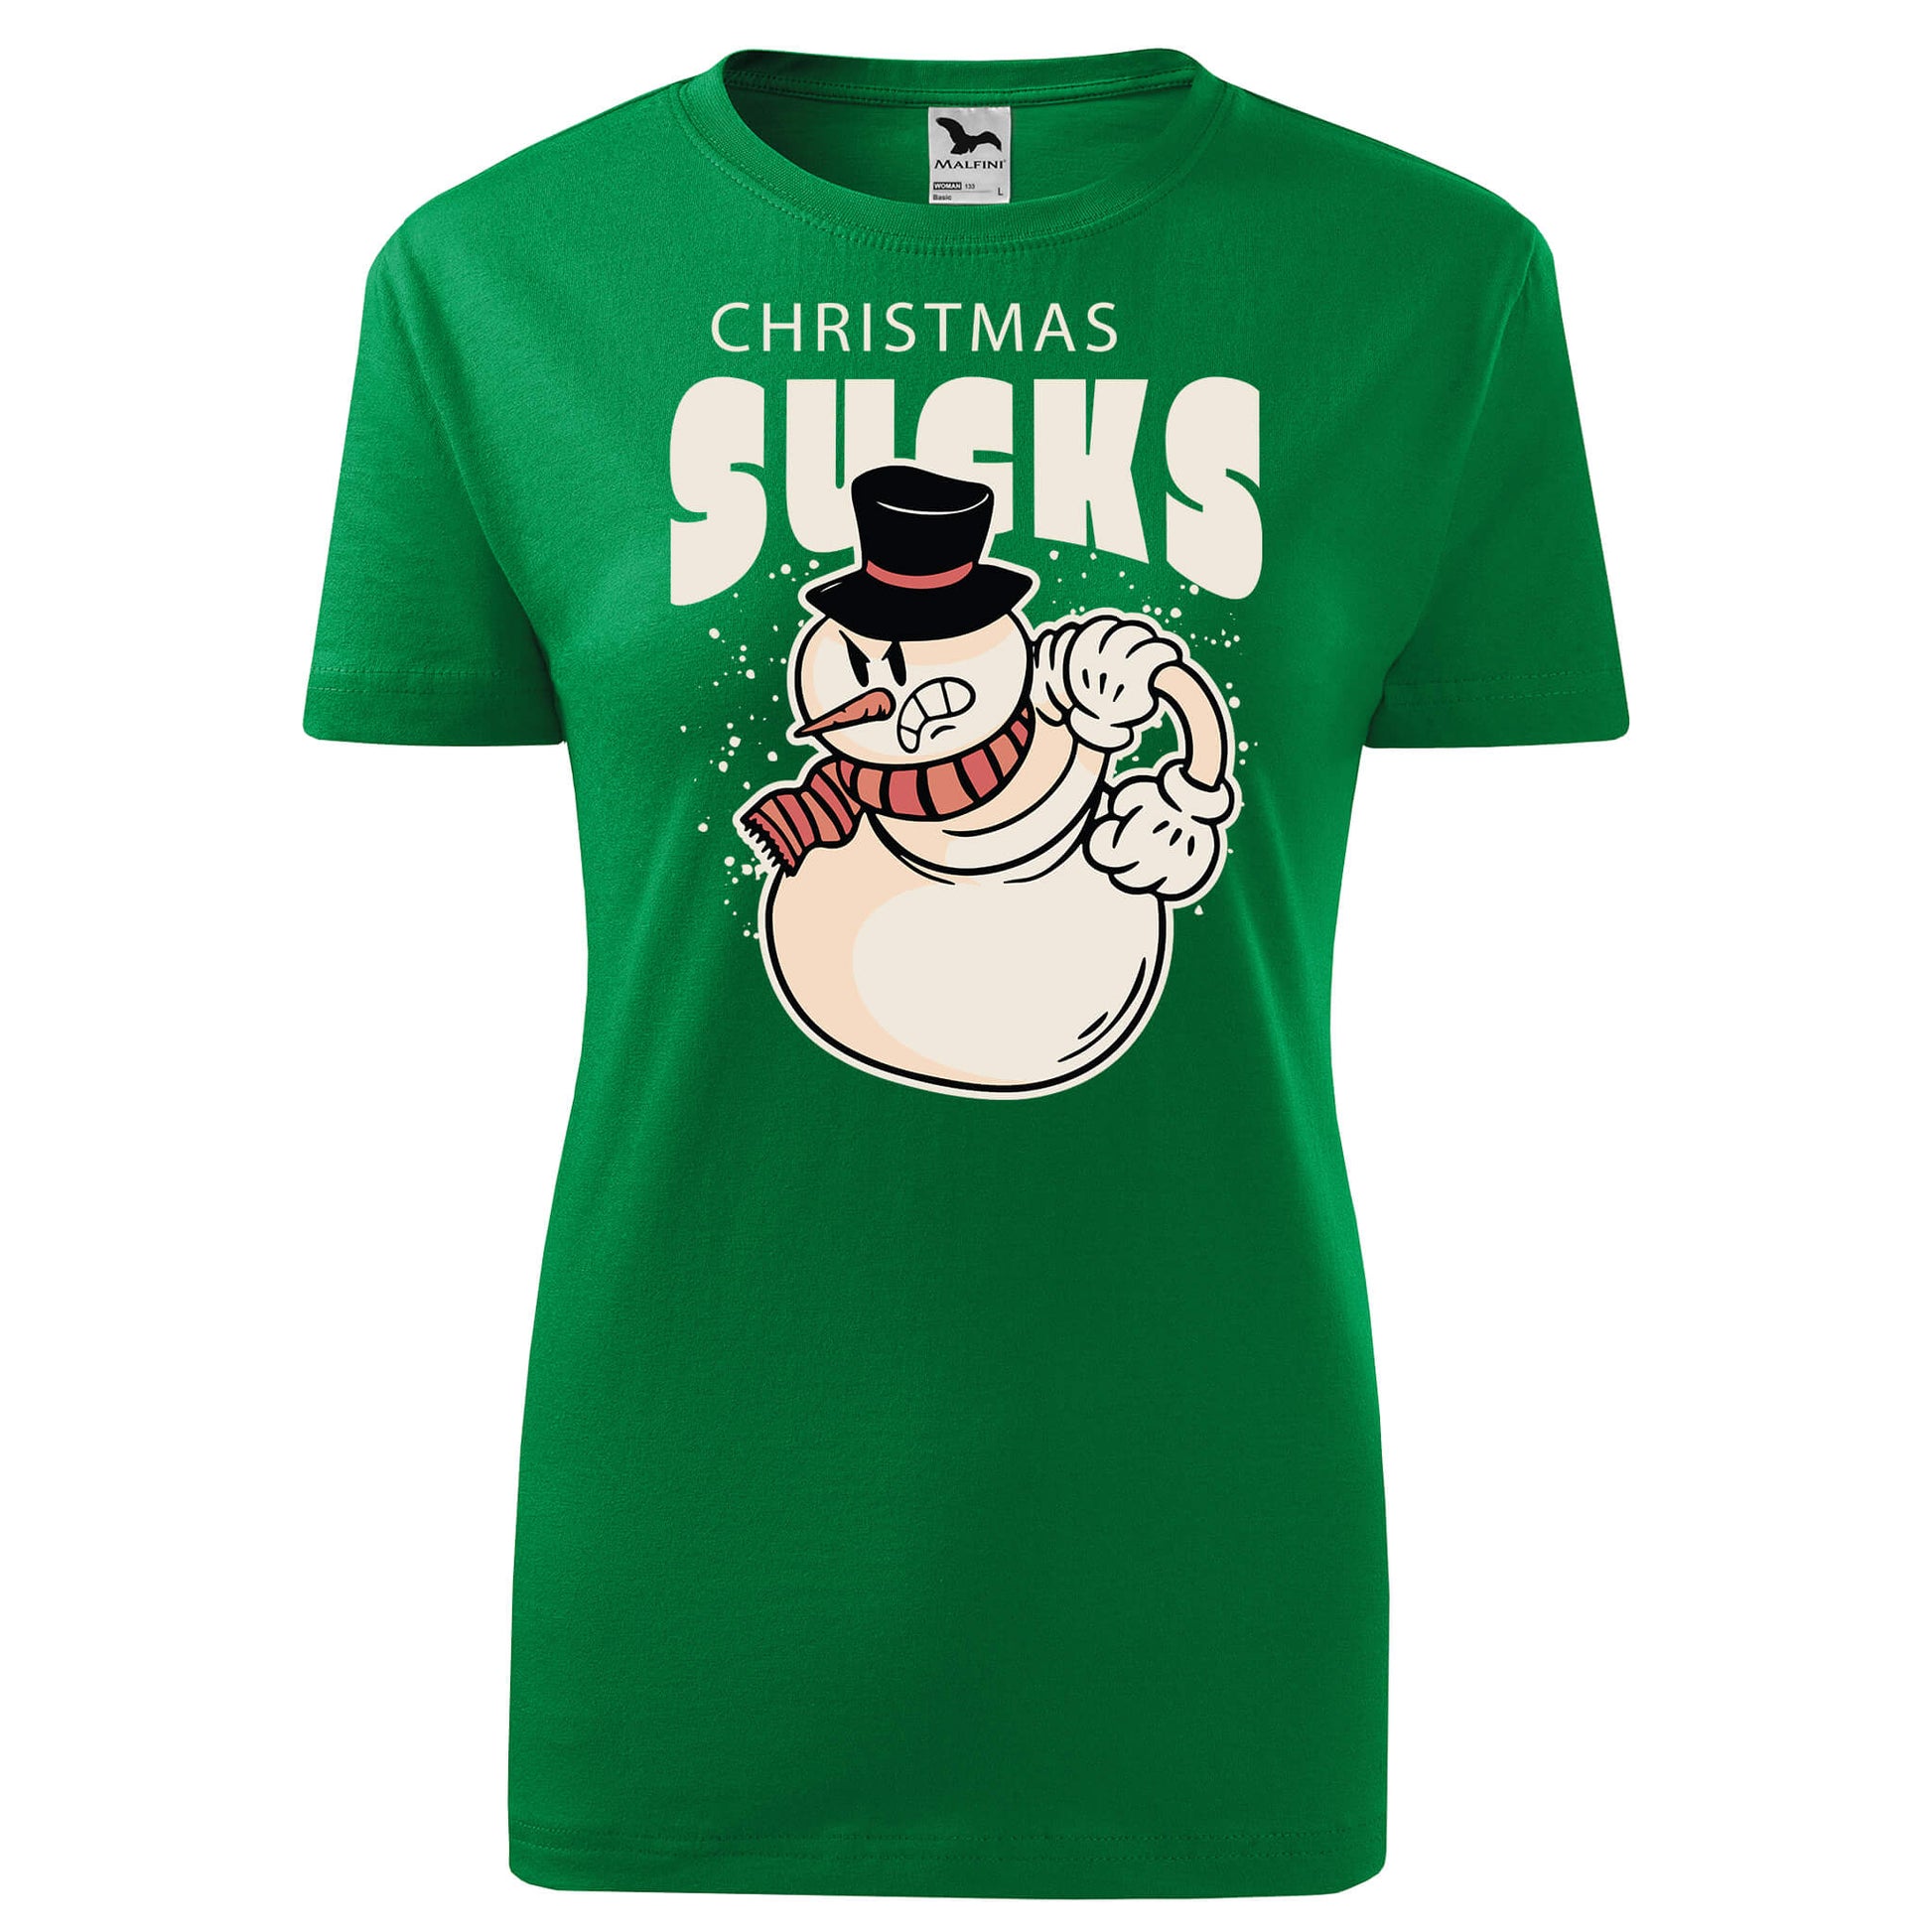 Christmas sucks t-shirt - rvdesignprint